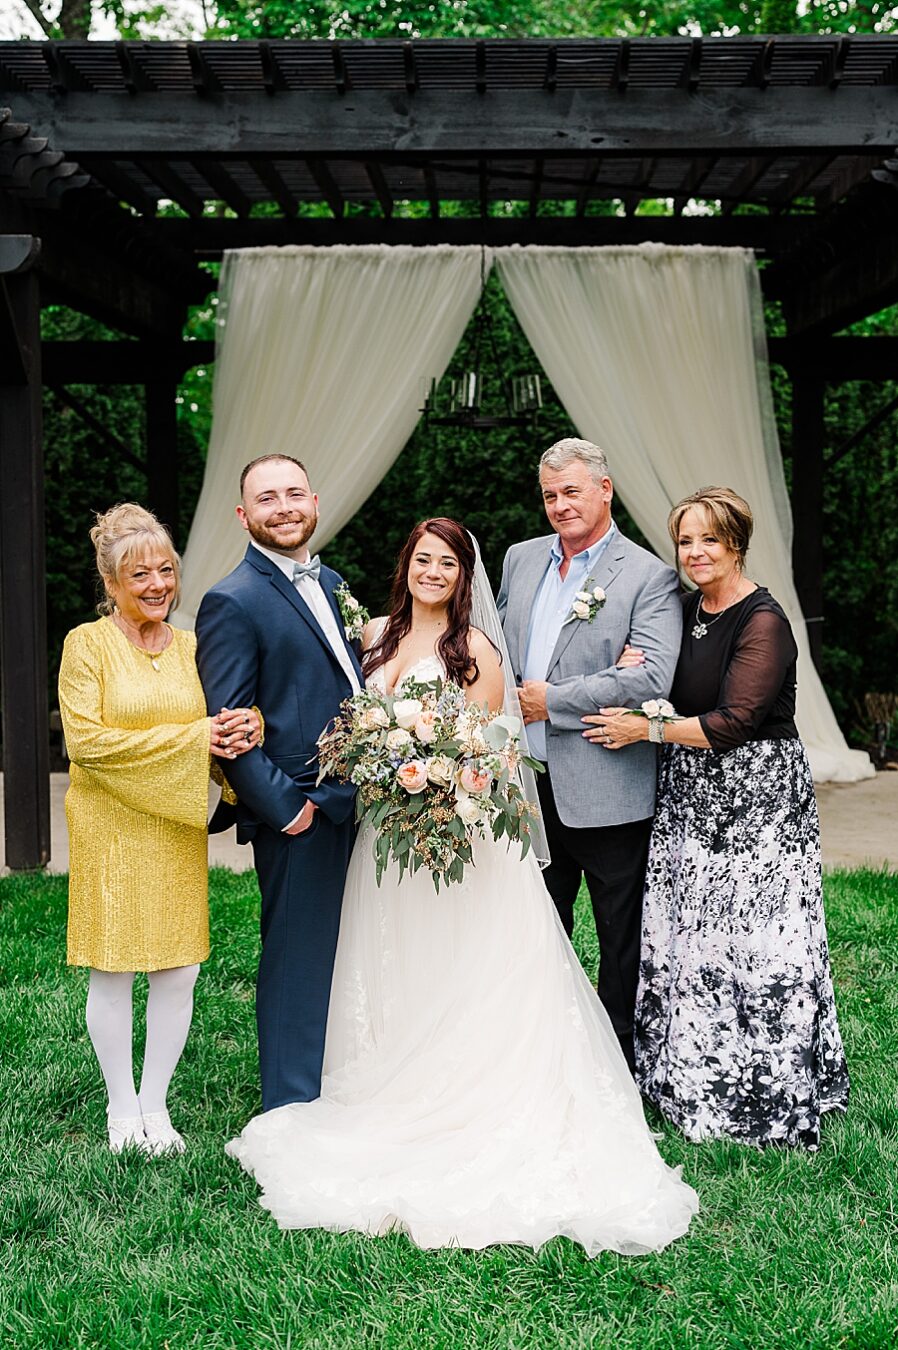 Family portrait at Wedding by Amanda May Photos